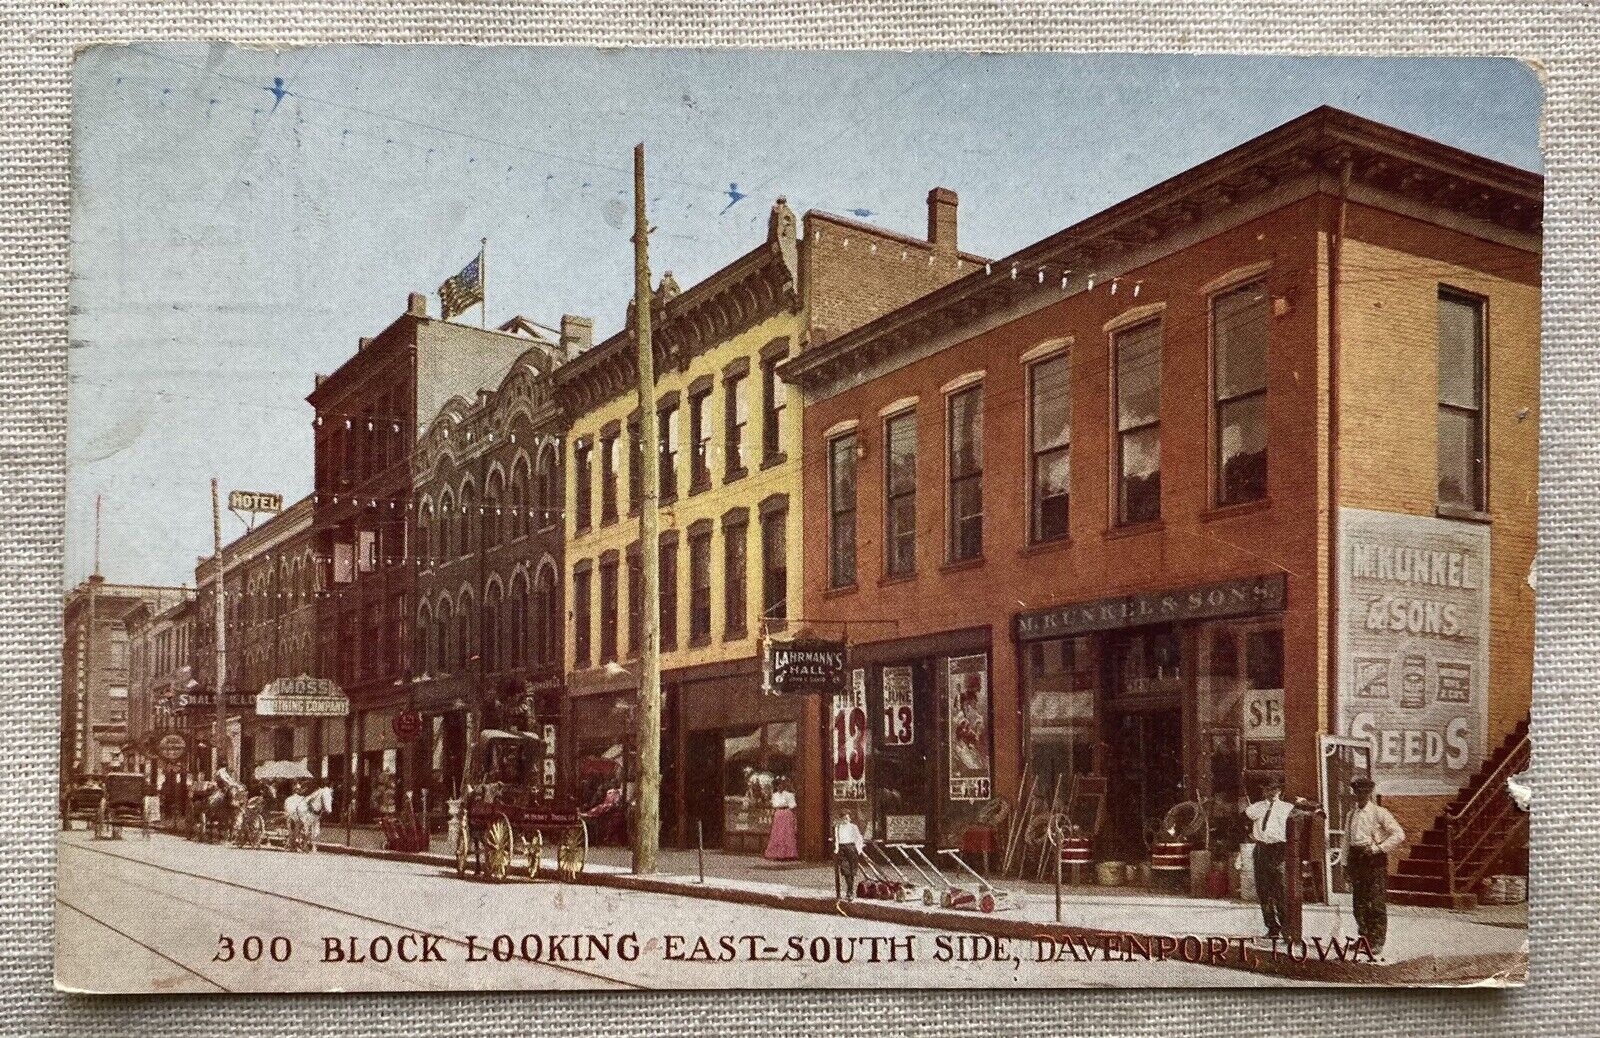 300 Block Looking East-South Side, Davenport, Iowa, Vintage Postcard